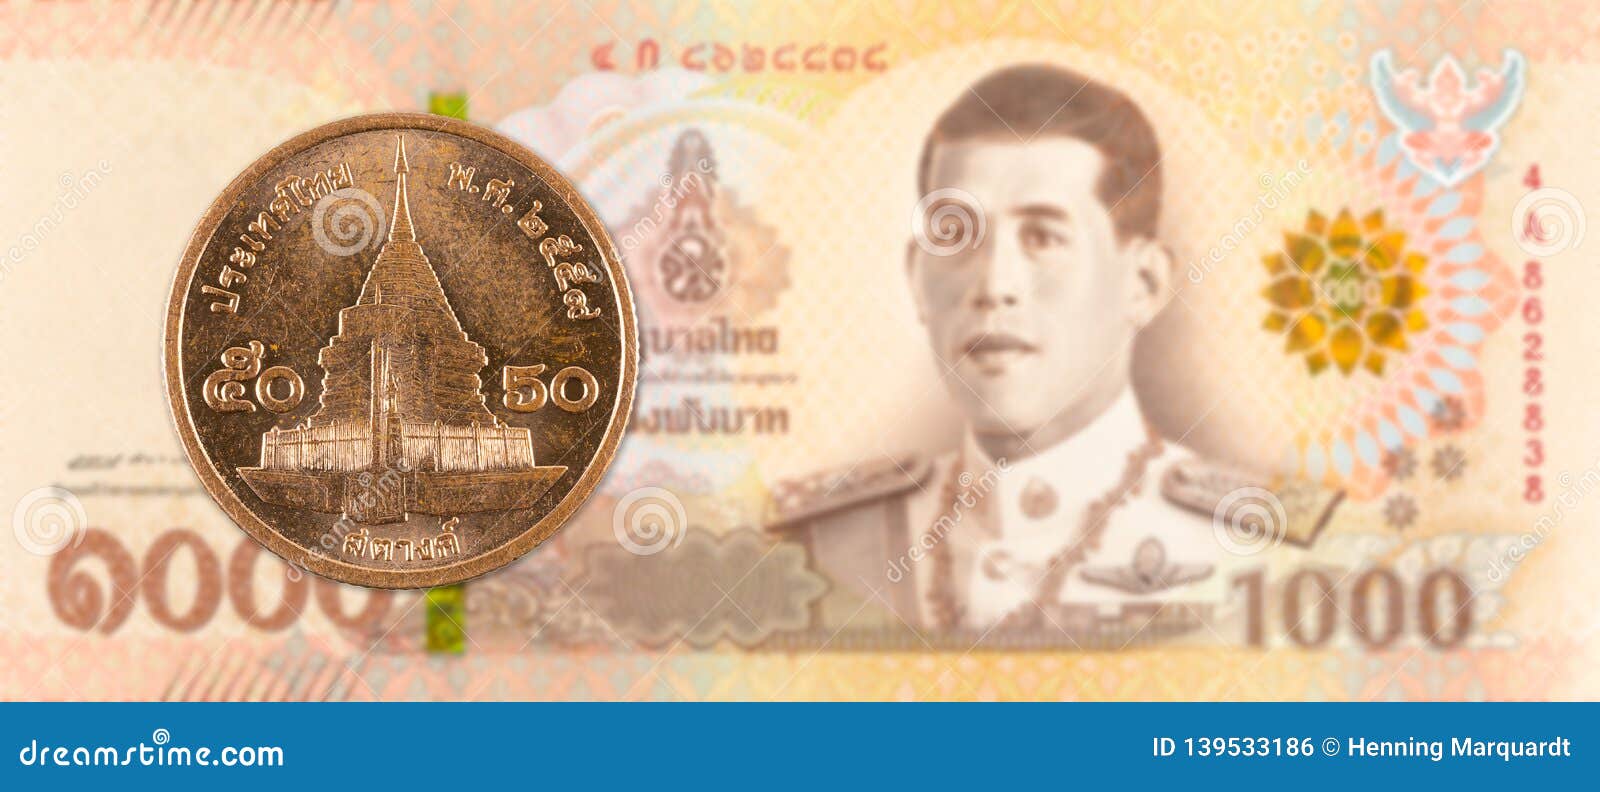 1000 Бат фото. Новый тайский бат. Банкнота 1000 бат. Таиланд. 2020. Тайские 1000 бат реклама Canon. 200 батов в рублях